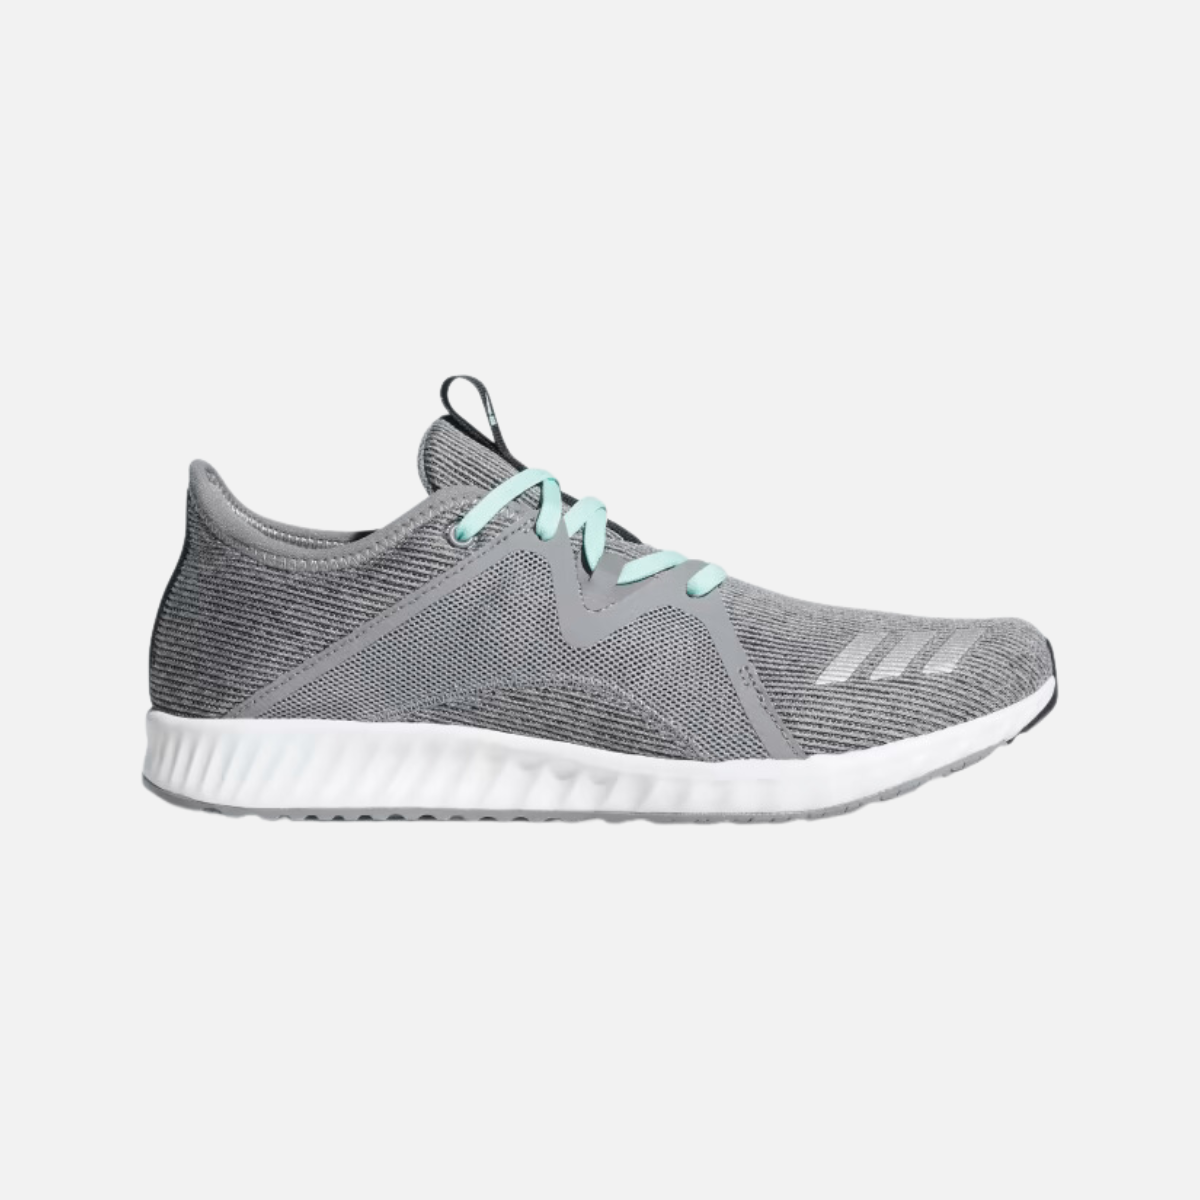 Adidas Edge Lux 2 Women's Training Shoes -Grey Three/Silver Metallic/Clear Mint